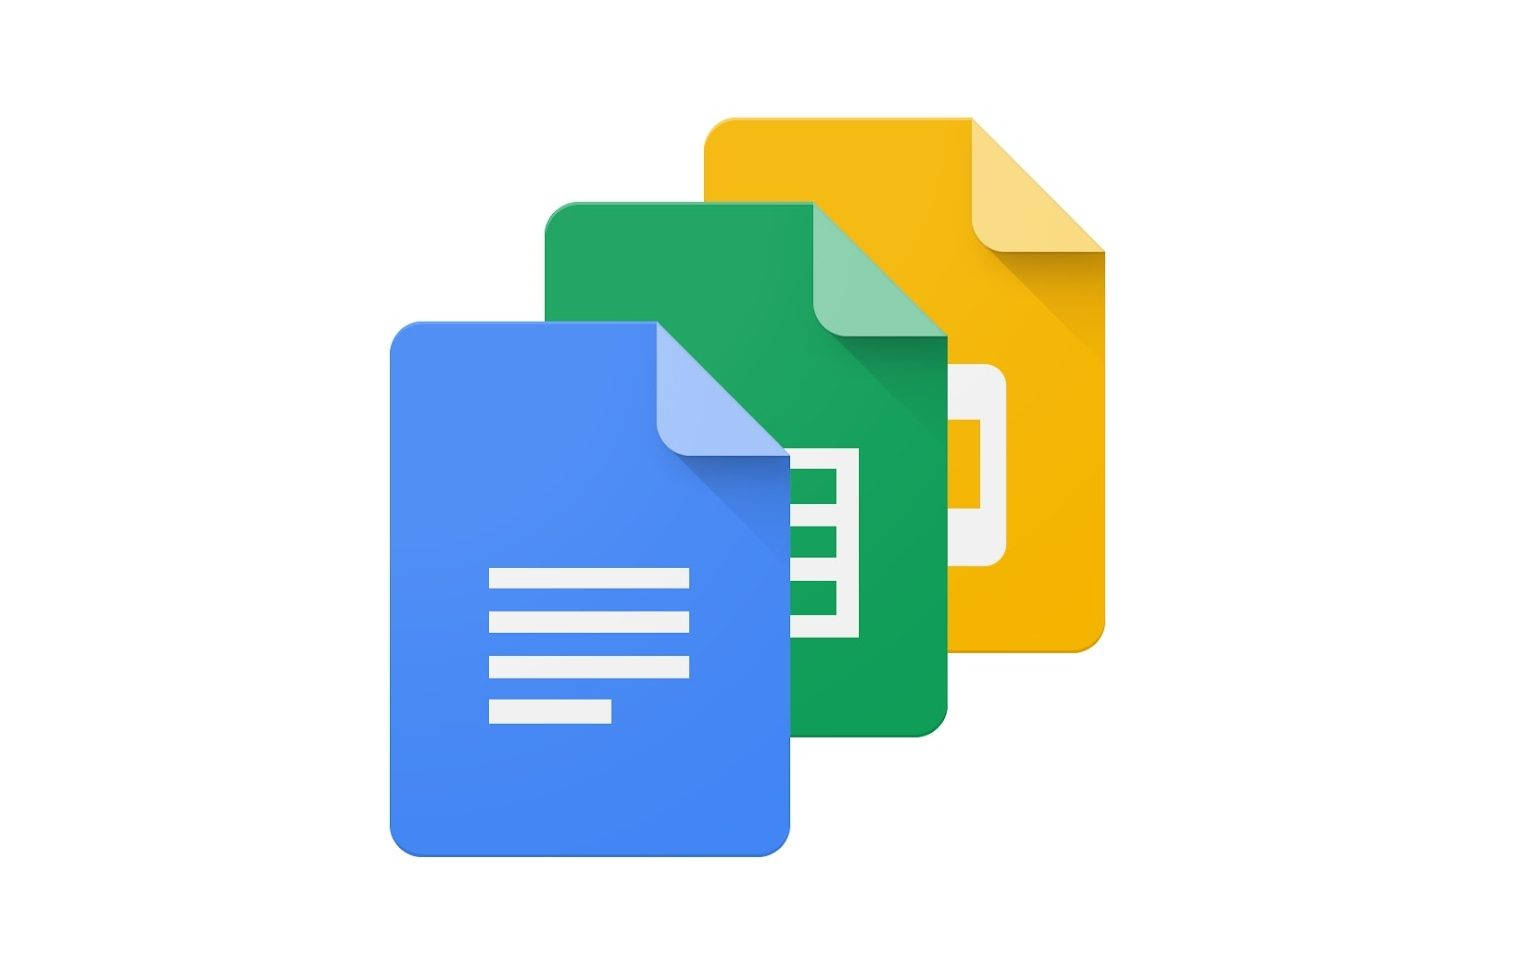 Free Google Docs Wallpaper Downloads, [100+] Google Docs Wallpapers for  FREE 